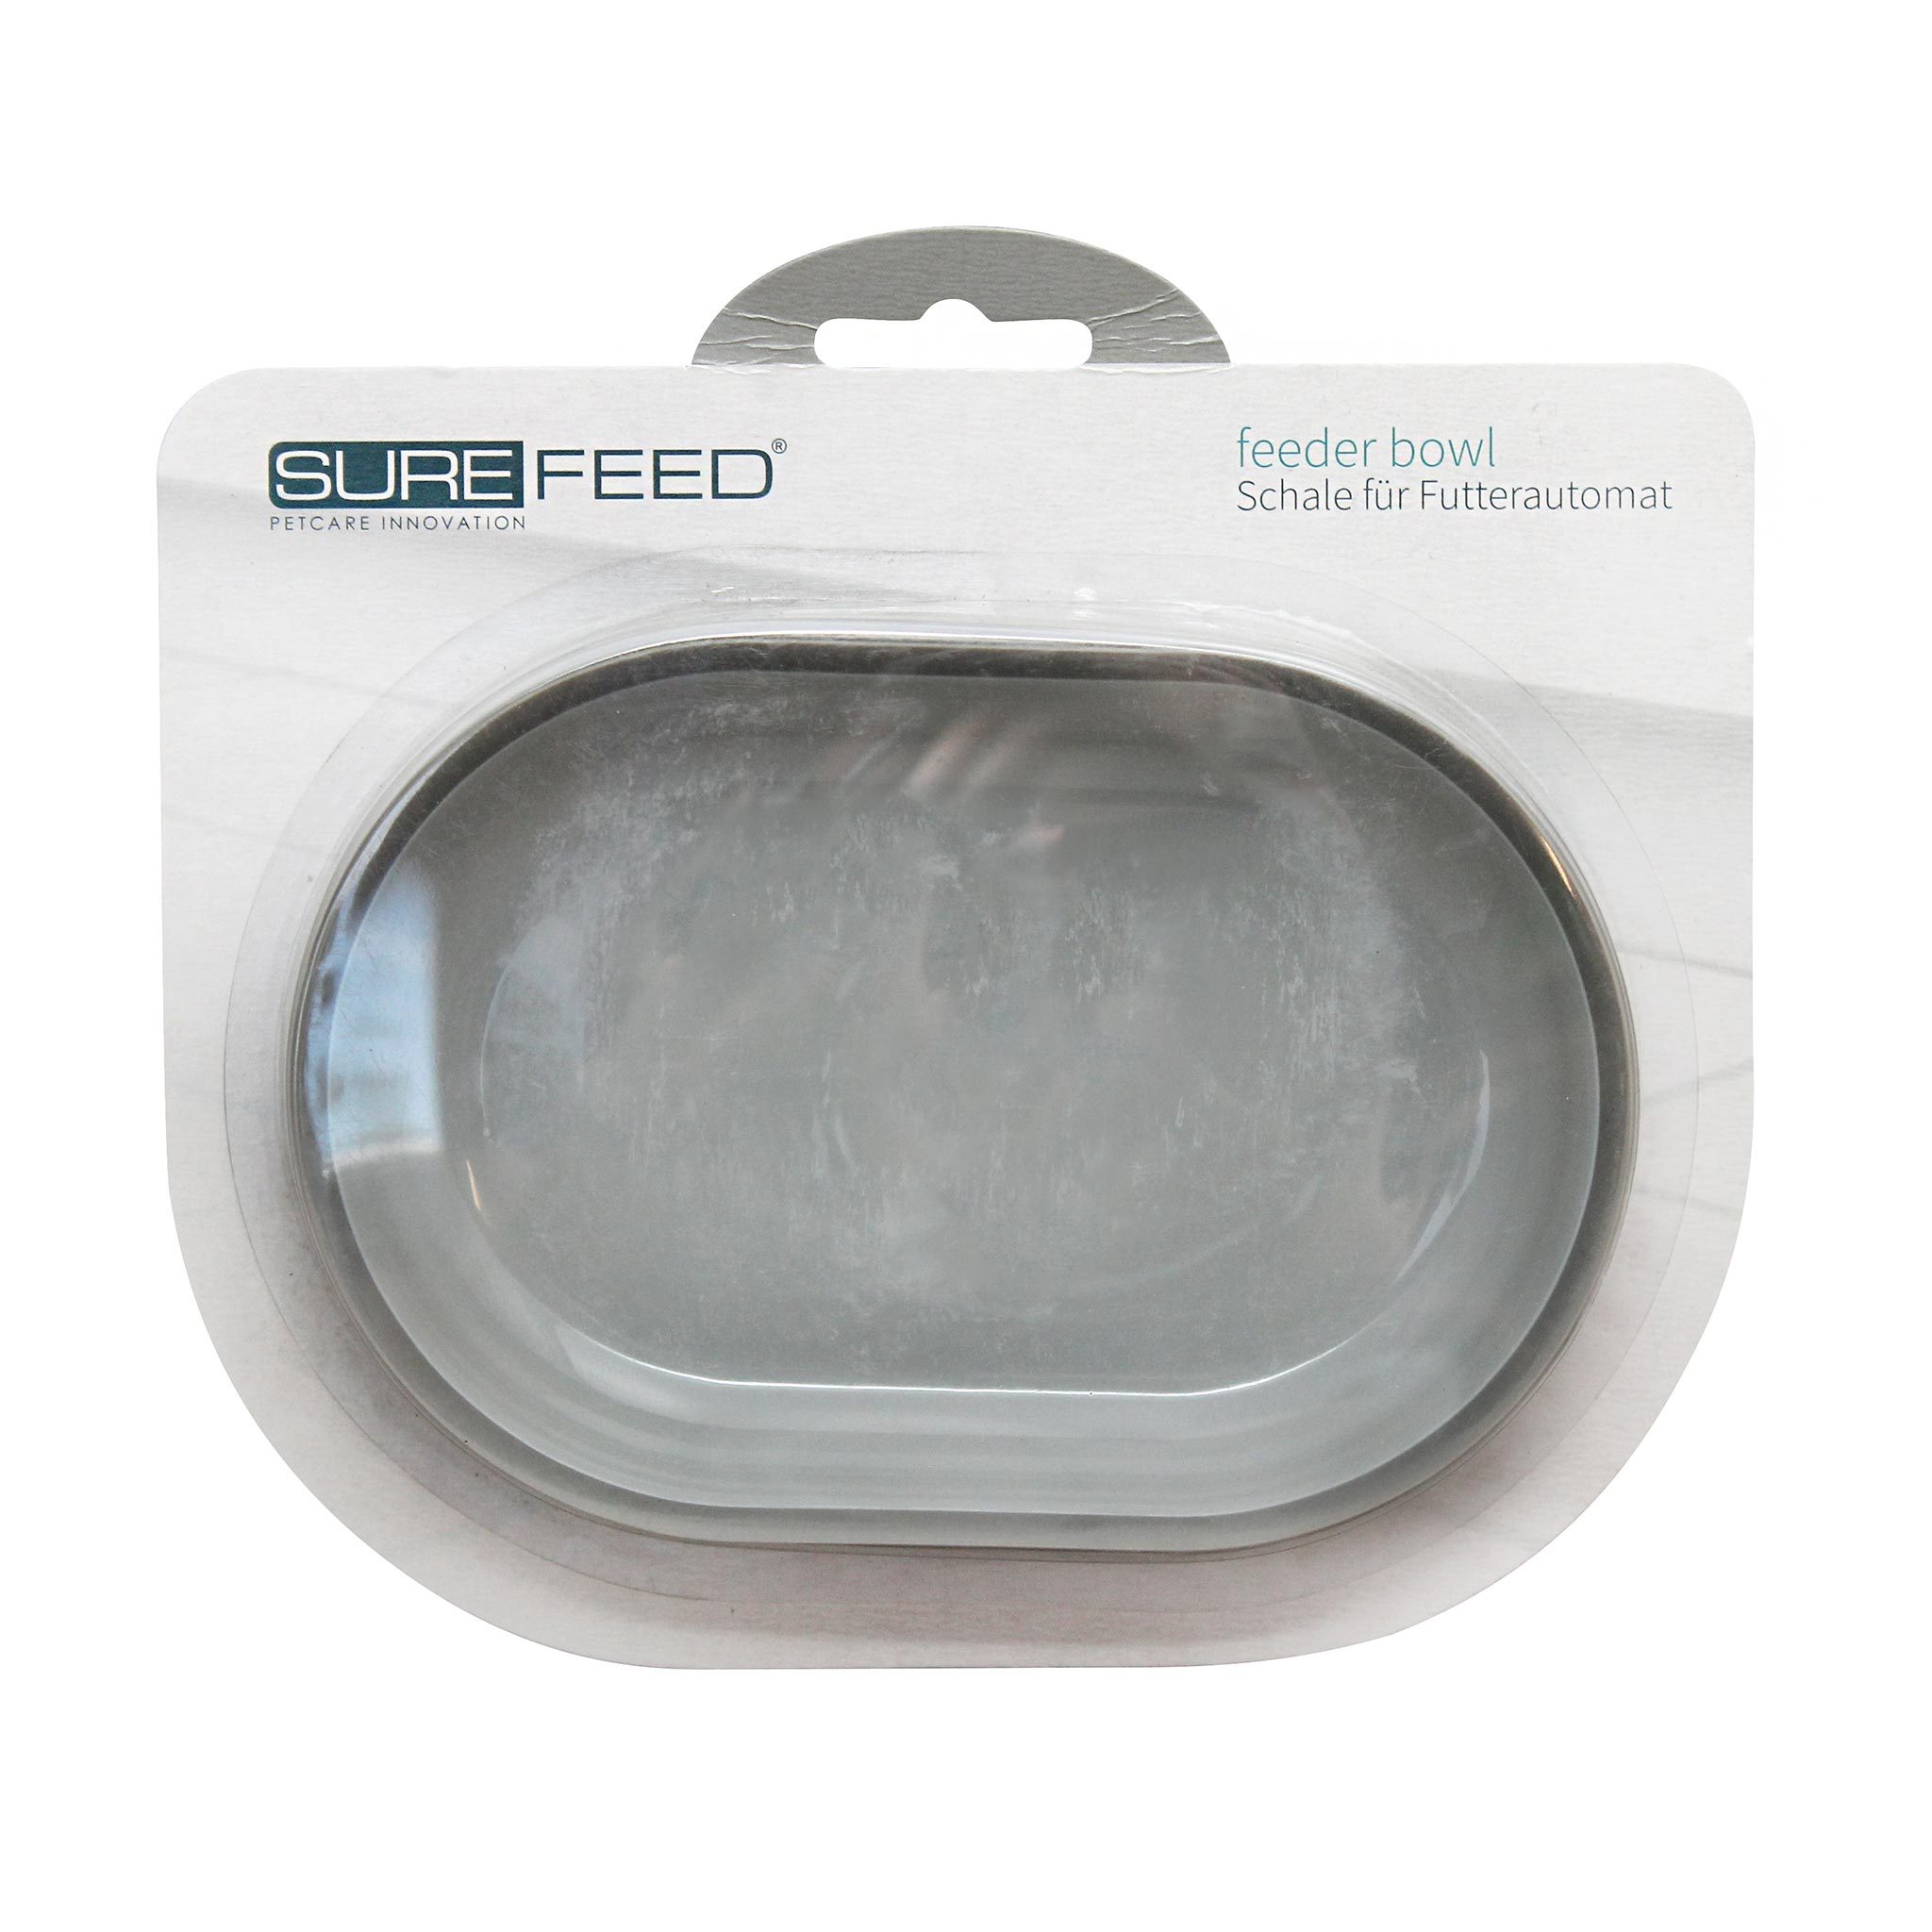 SureFeed Feeder Bowl ชามให้อาหาร สำหรับที่ให้อาหารอัตโนมัติรุ่น Sensor และ Microchip สุนัขและแมว ความจุ 400 มล. (สีเทา)